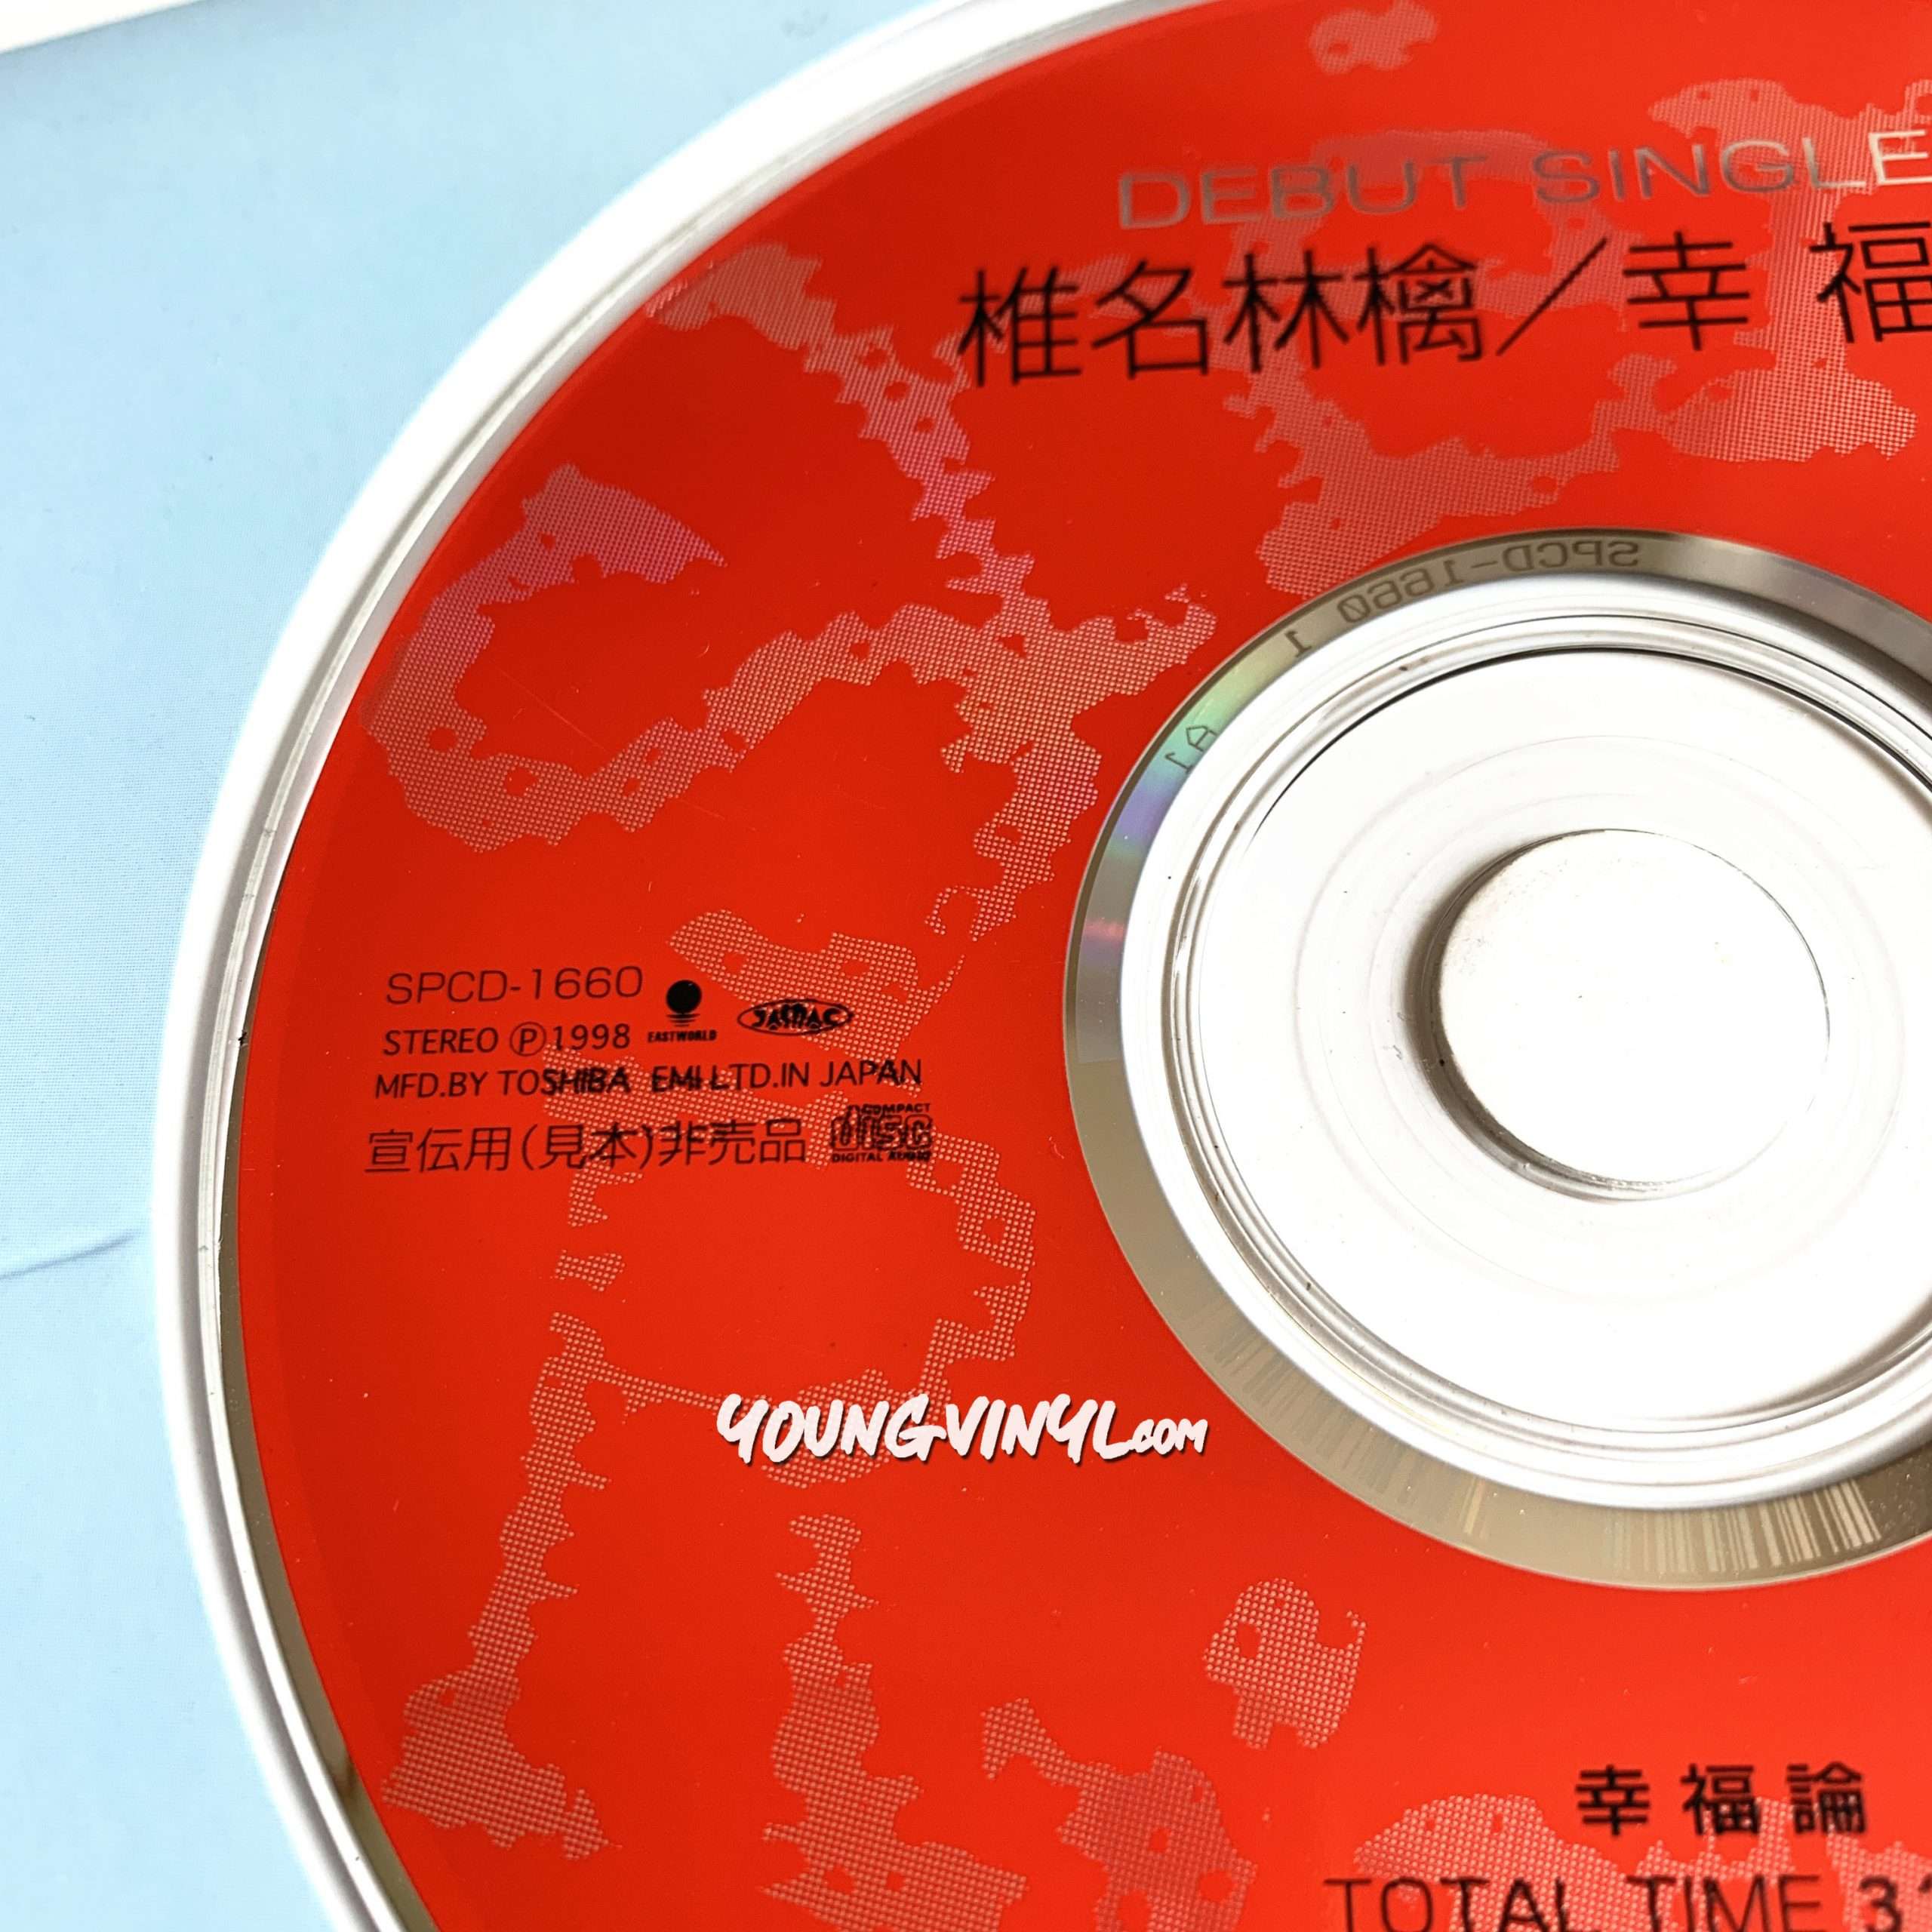 Shiina Ringo 幸福論 Promo CD 椎名林檎 - Young Vinyl